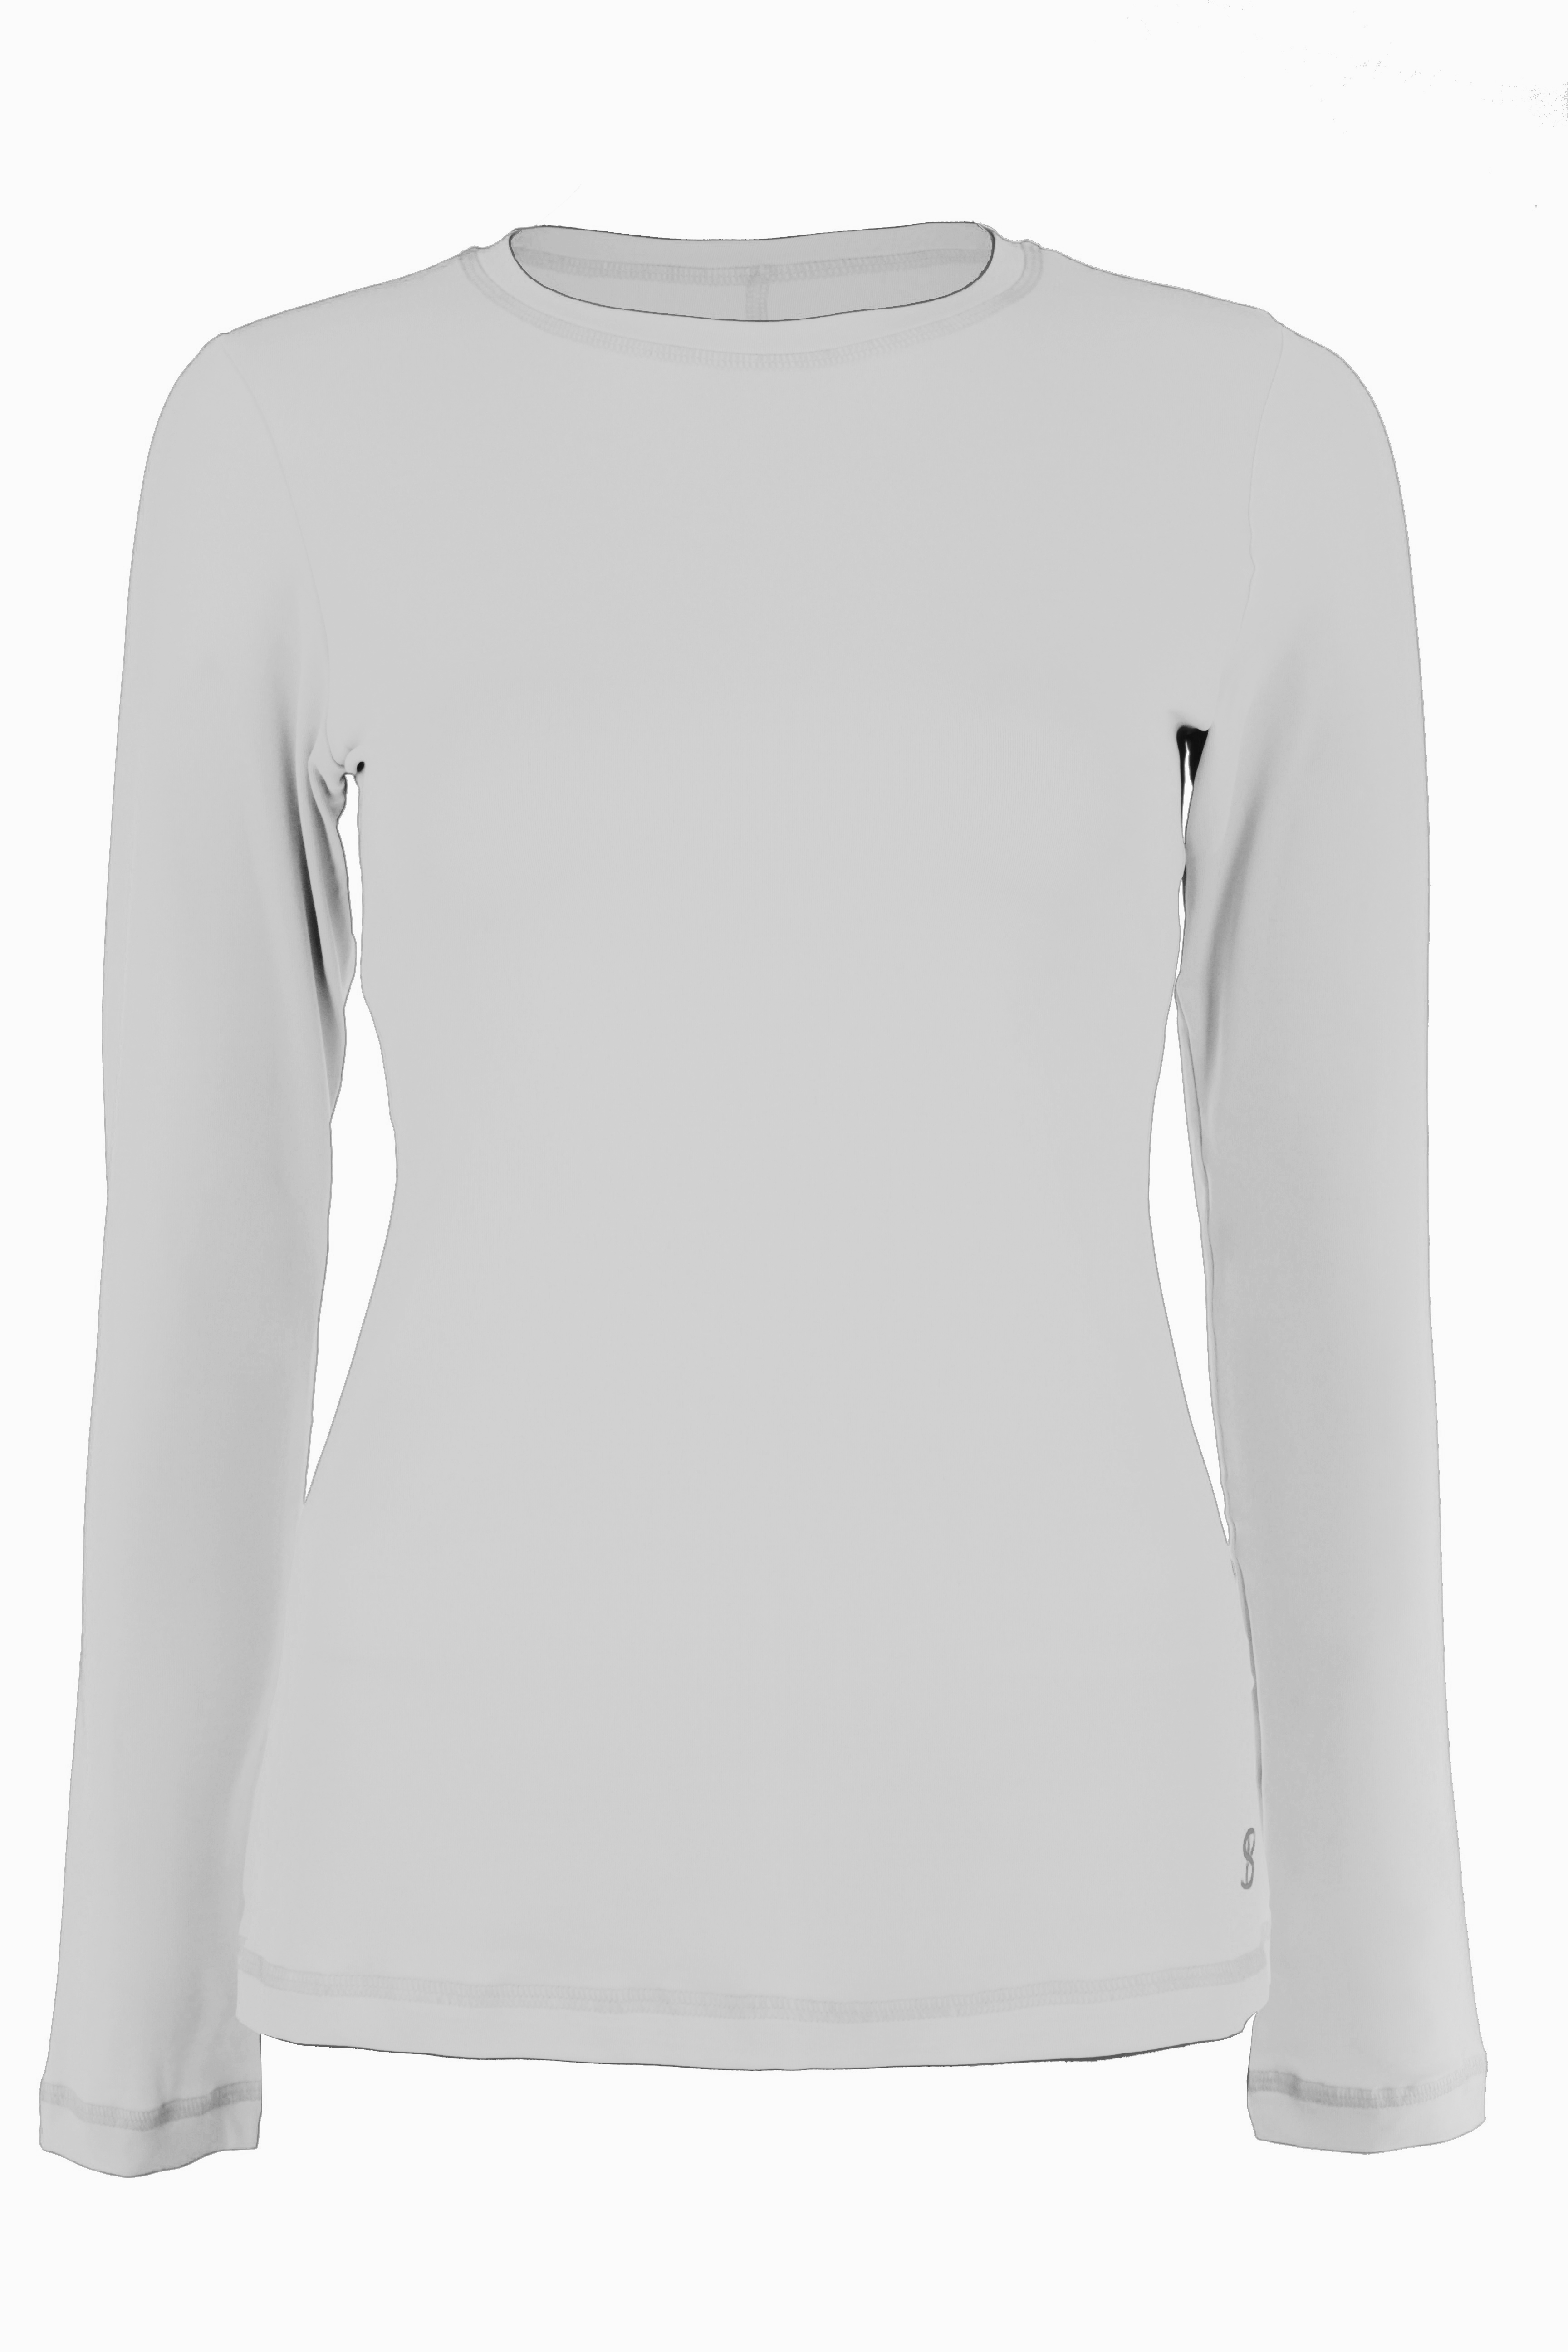 Sofibella Women&amp;apos;s Long Sleeve Tennis Top (White)